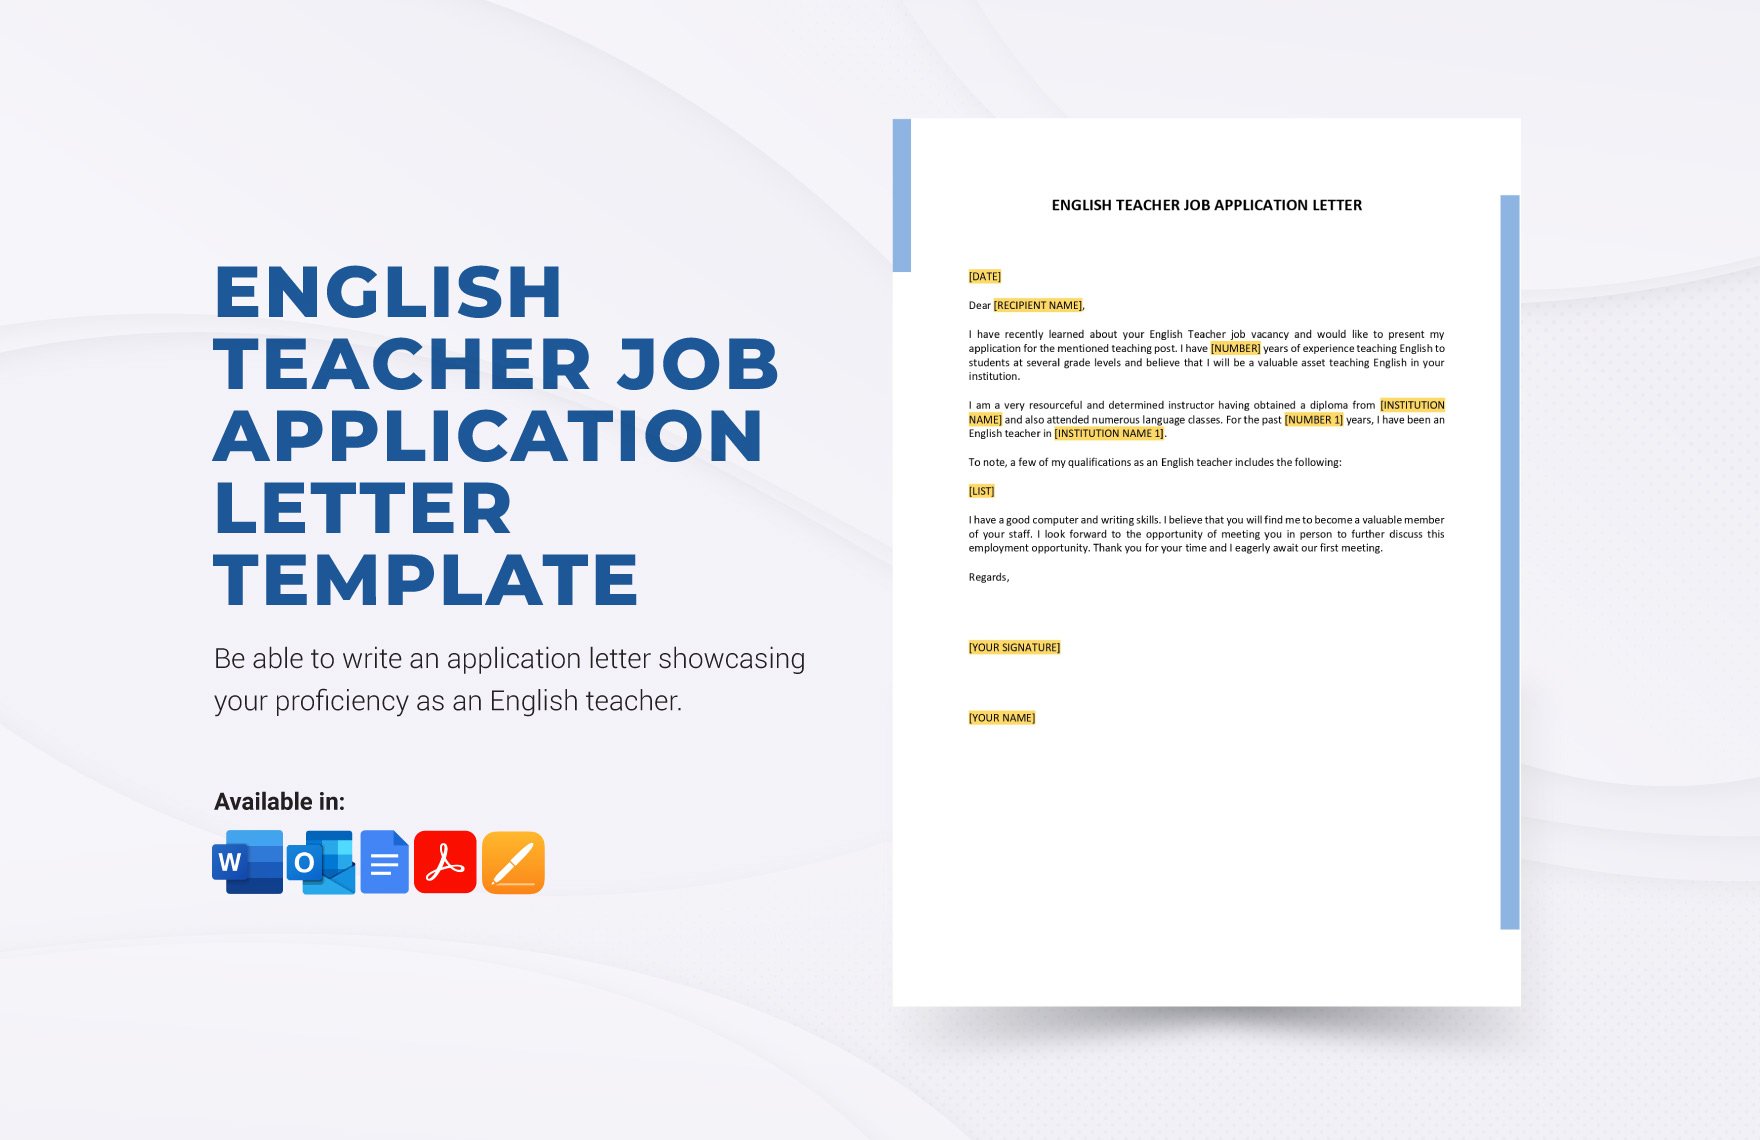 English Teacher Job Application Letter Template